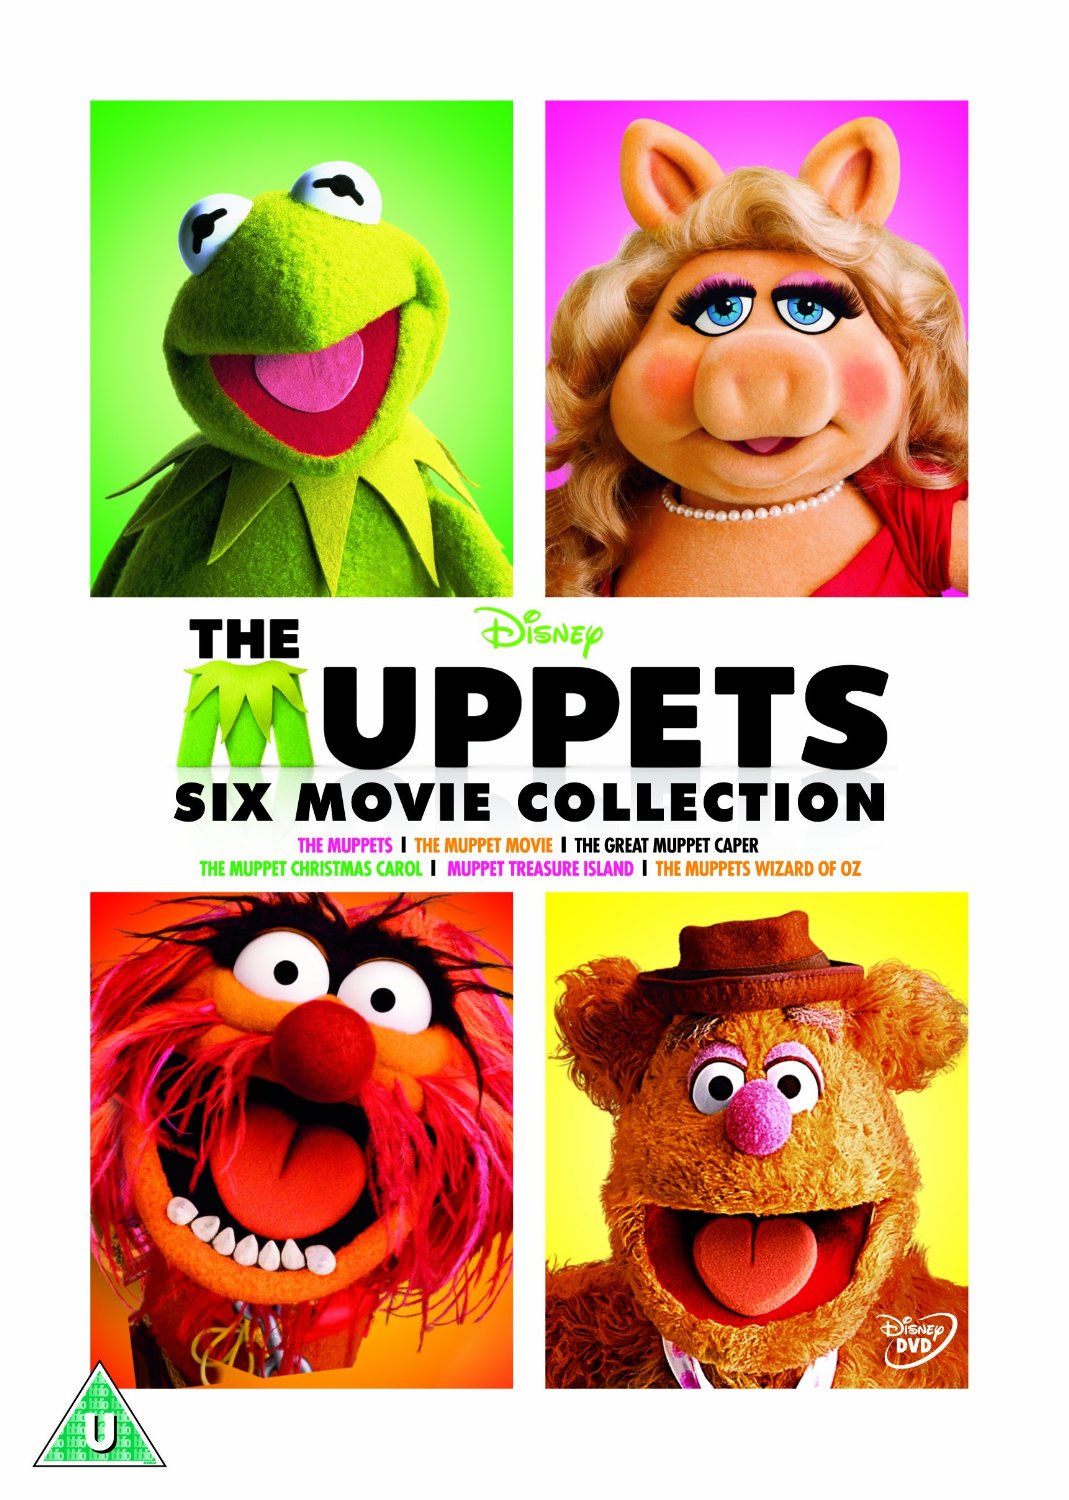 The Muppet Christmas Carol (video) - Muppet Wiki